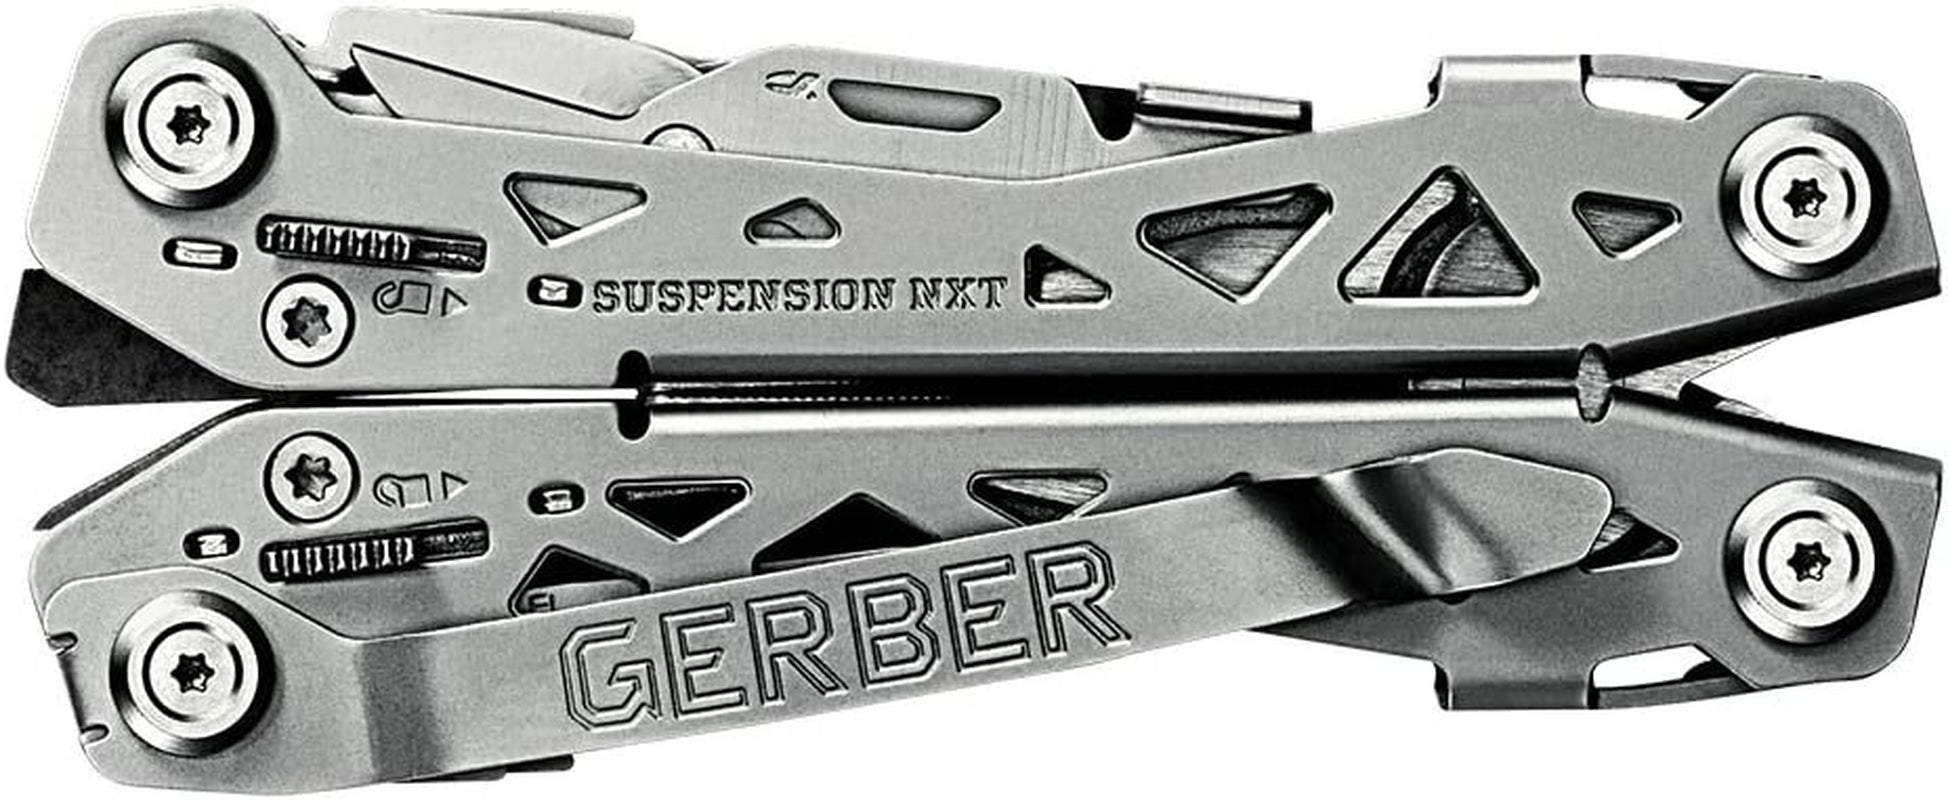 Gerber Gear, Gerber Gear 30-001364N Suspension-Nxt, 15-In-1 Multitool Knife, Needle Nose Pliers Pocket Knife with Pocket Clip, EDC Gear, Steel